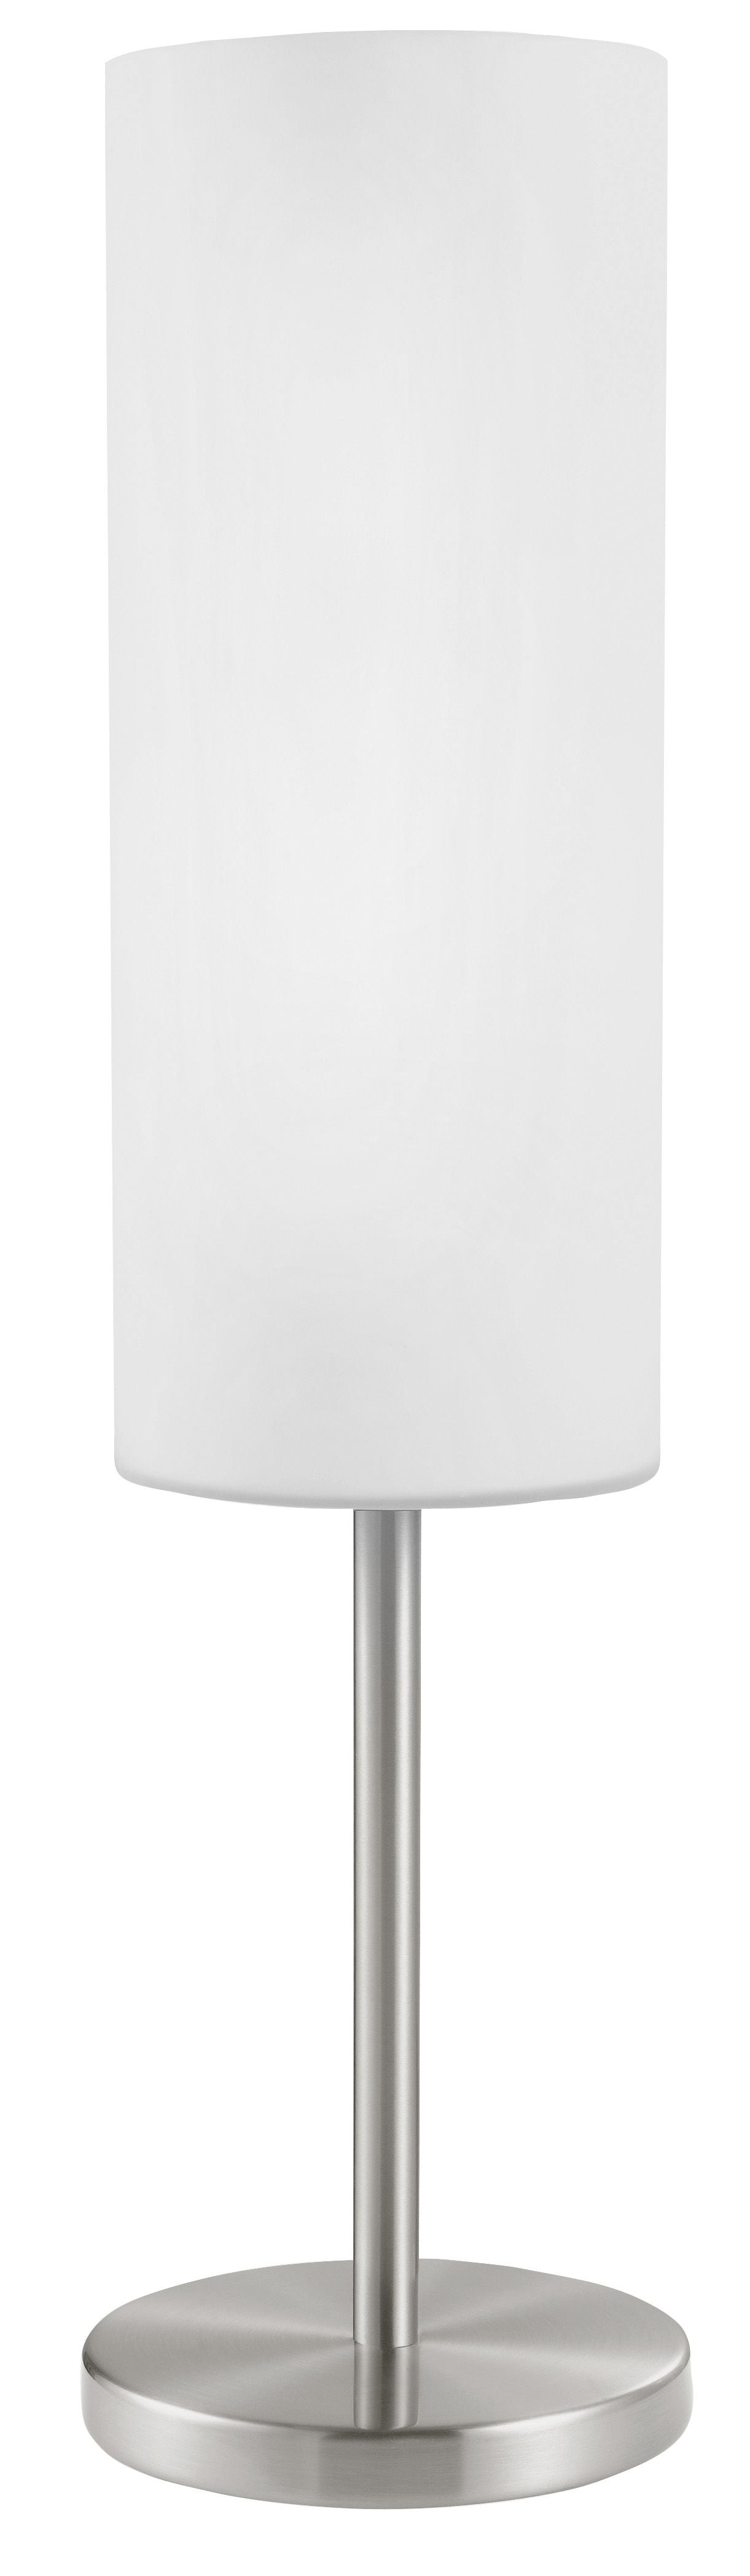 Troy 3 Lampe sur table Nickel - 85981A | EGLO